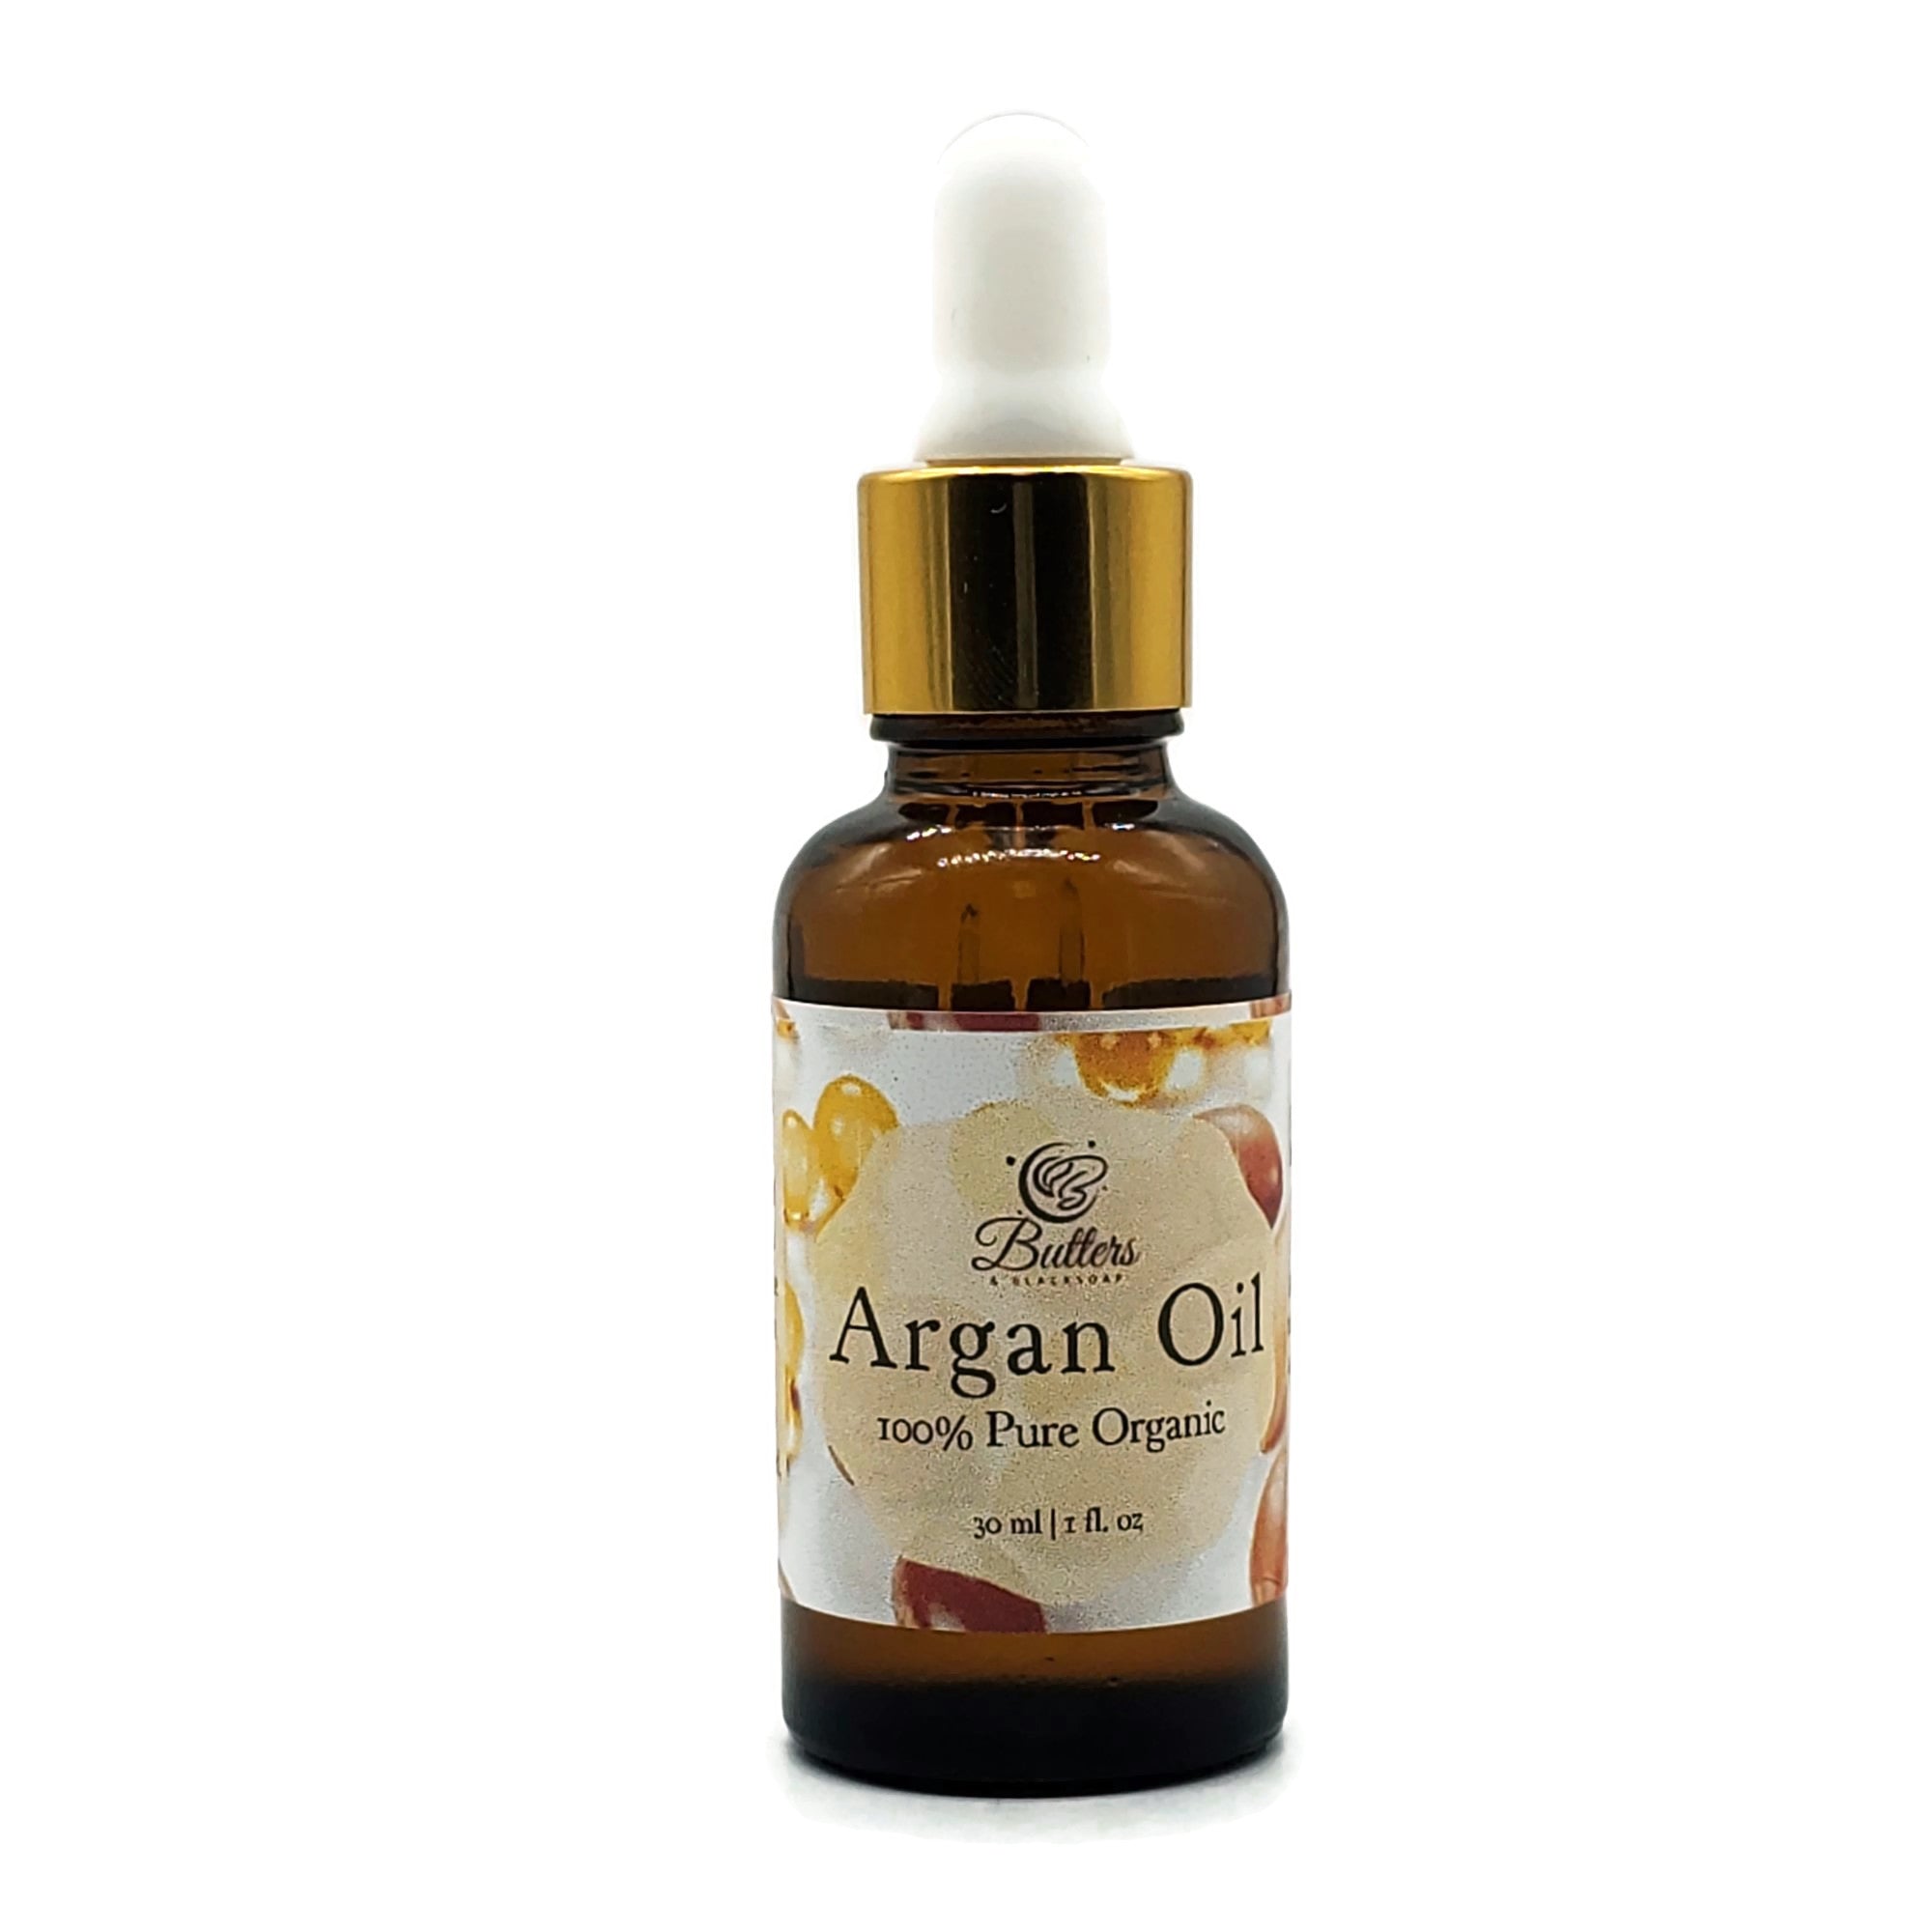 argan oil bottle